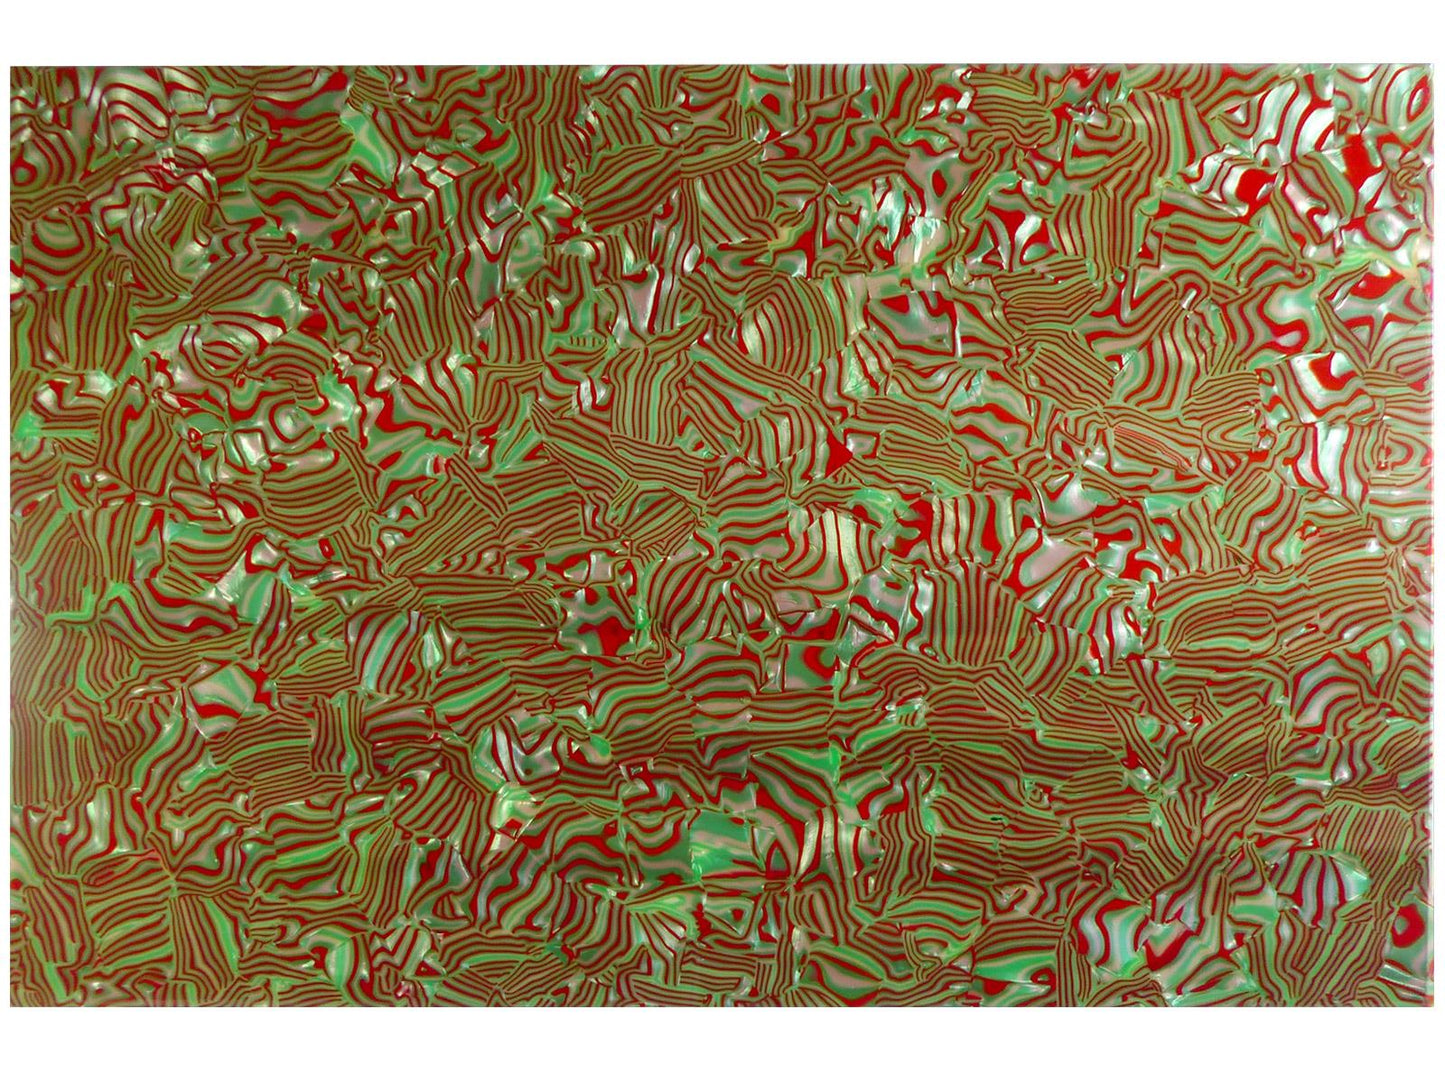 Borderlands Green and Red Shell PVC Sheet - 430x290x2.5mm (16.9x11.42x0.1"), 4-Ply